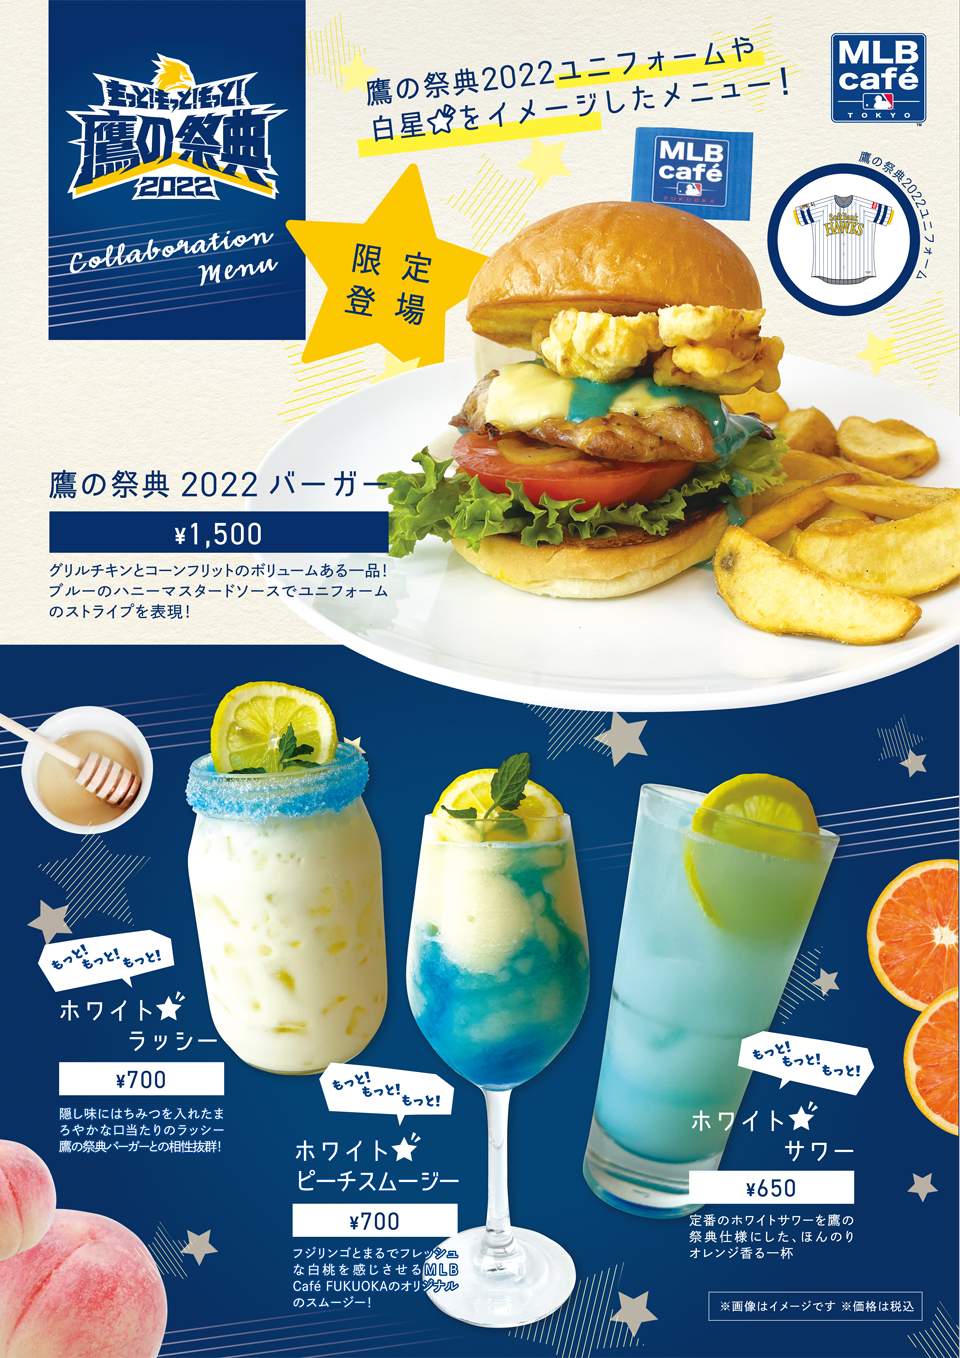 MLB café TOKYO 東京ドームシティ店：鷹の祭典福岡限定コラボメニュー